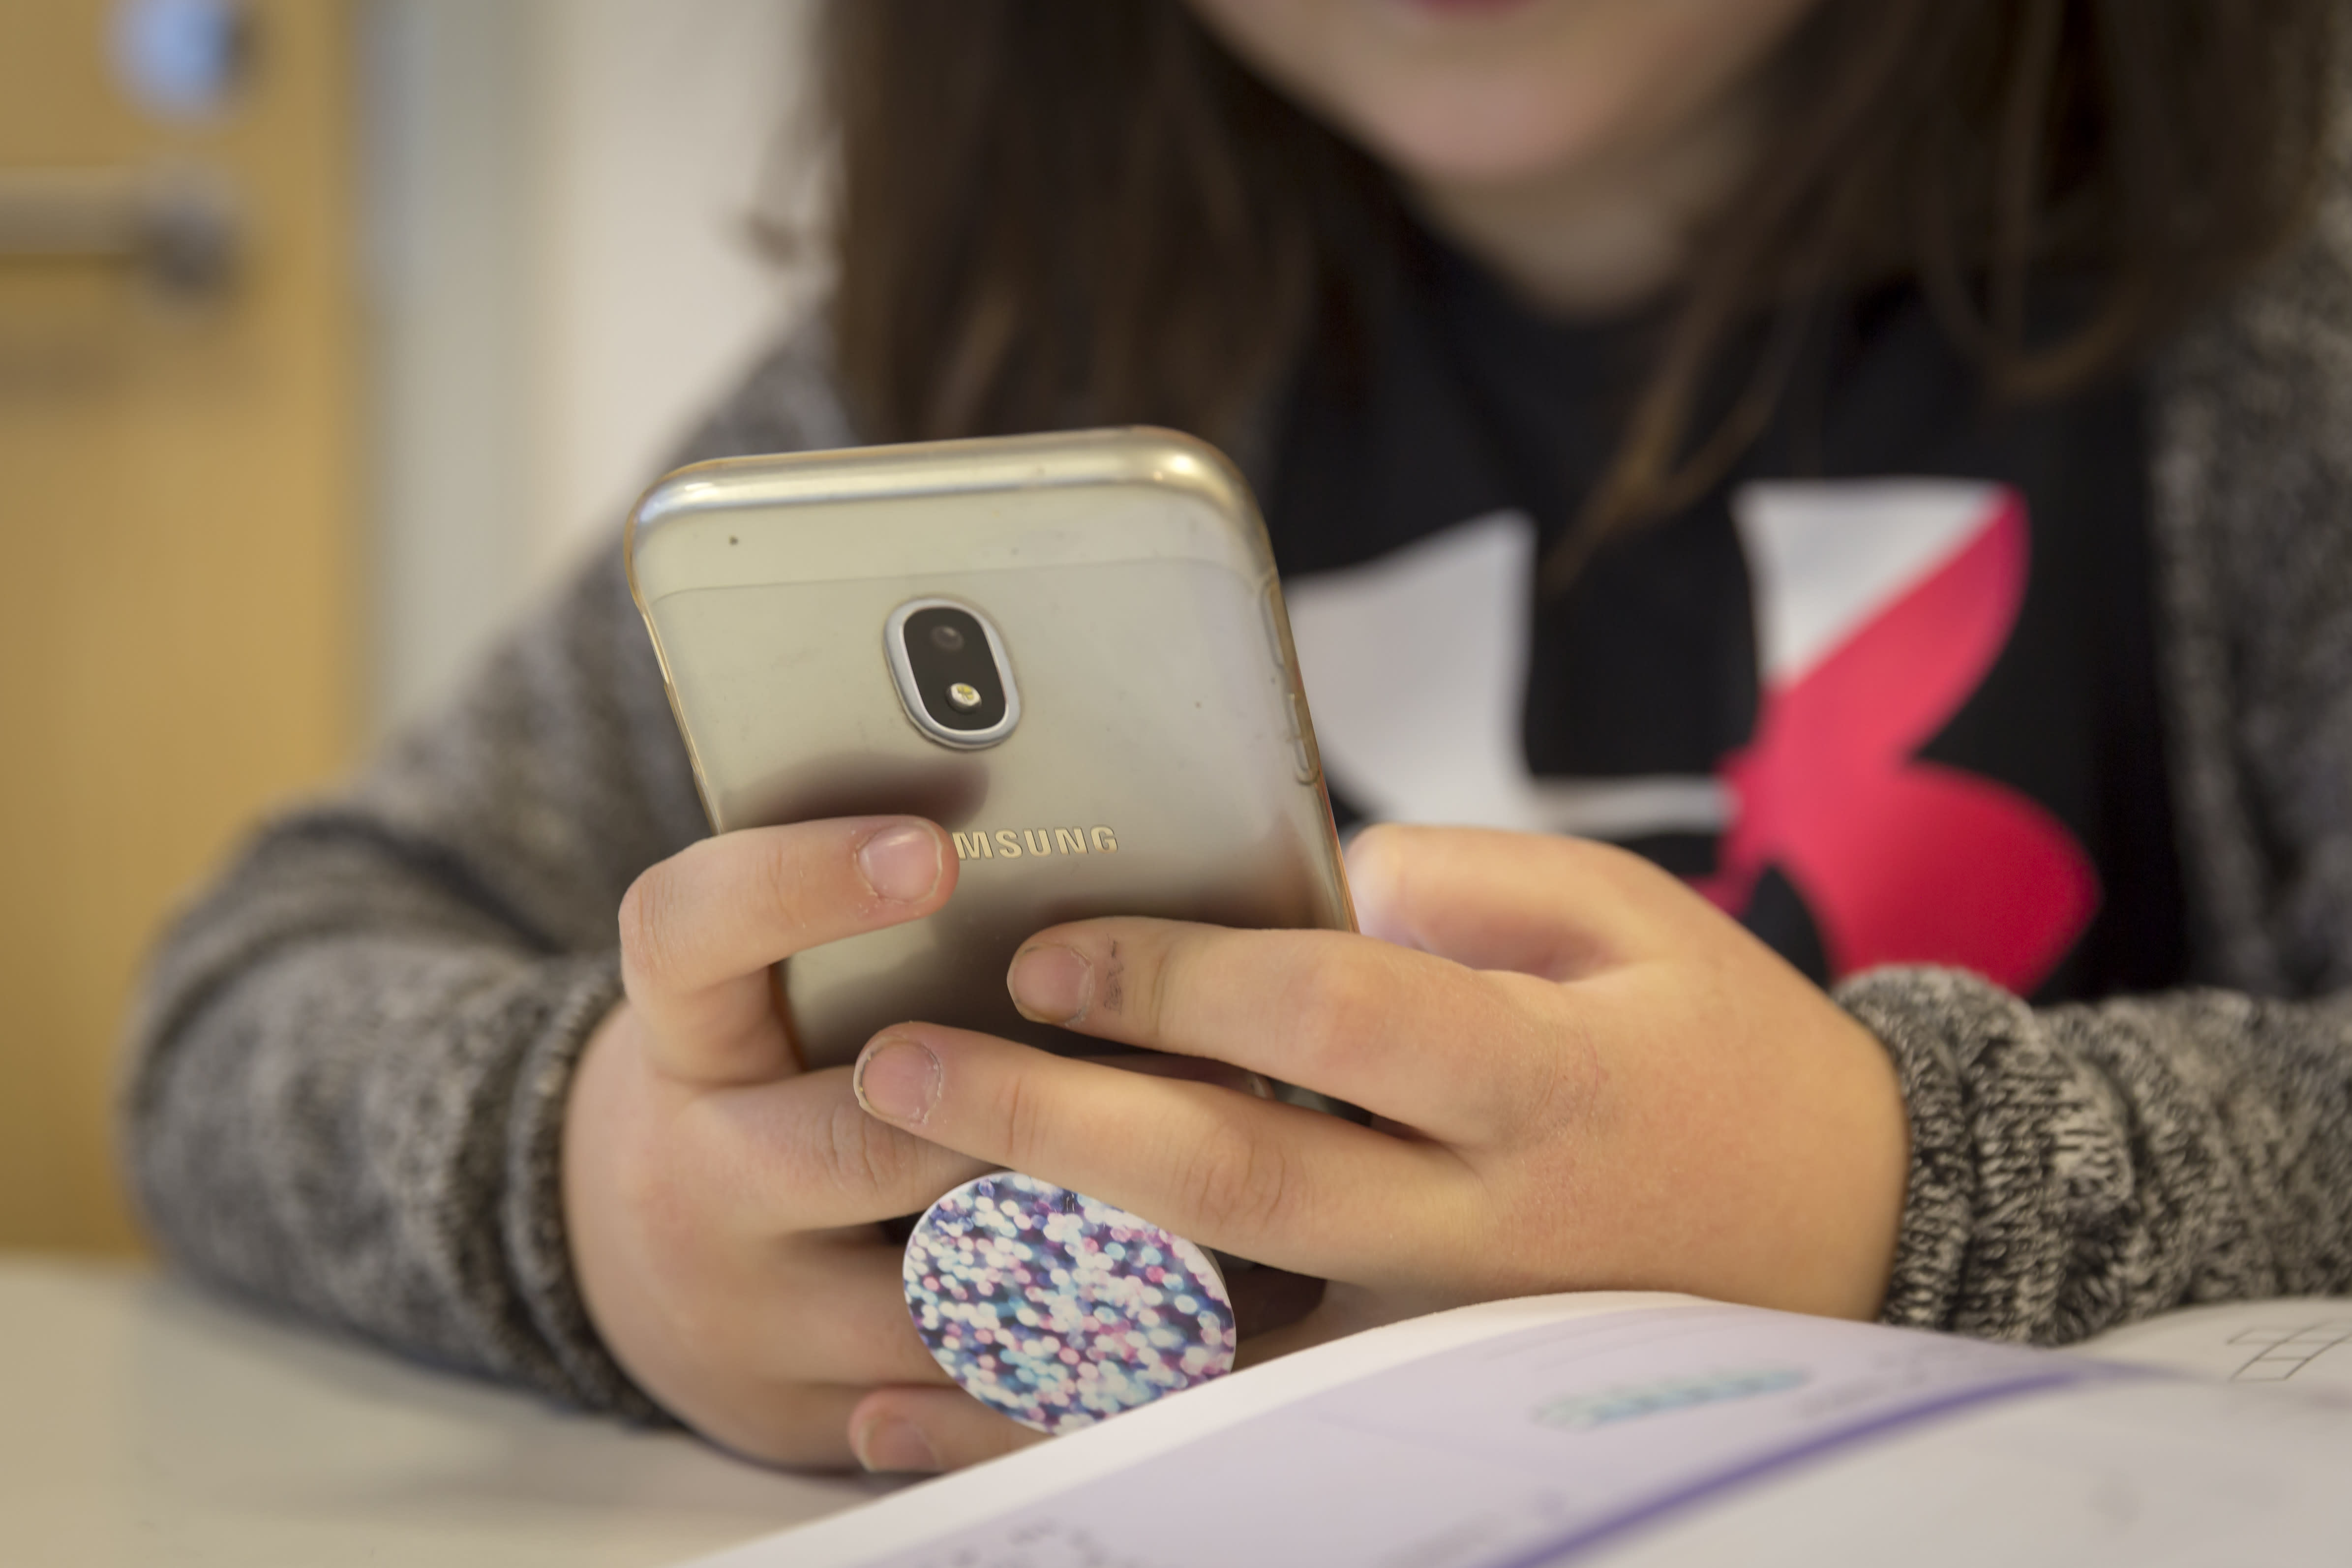 STT: الهواتف الذكية في المدارس قيد النظر في المفاوضات الحكومية